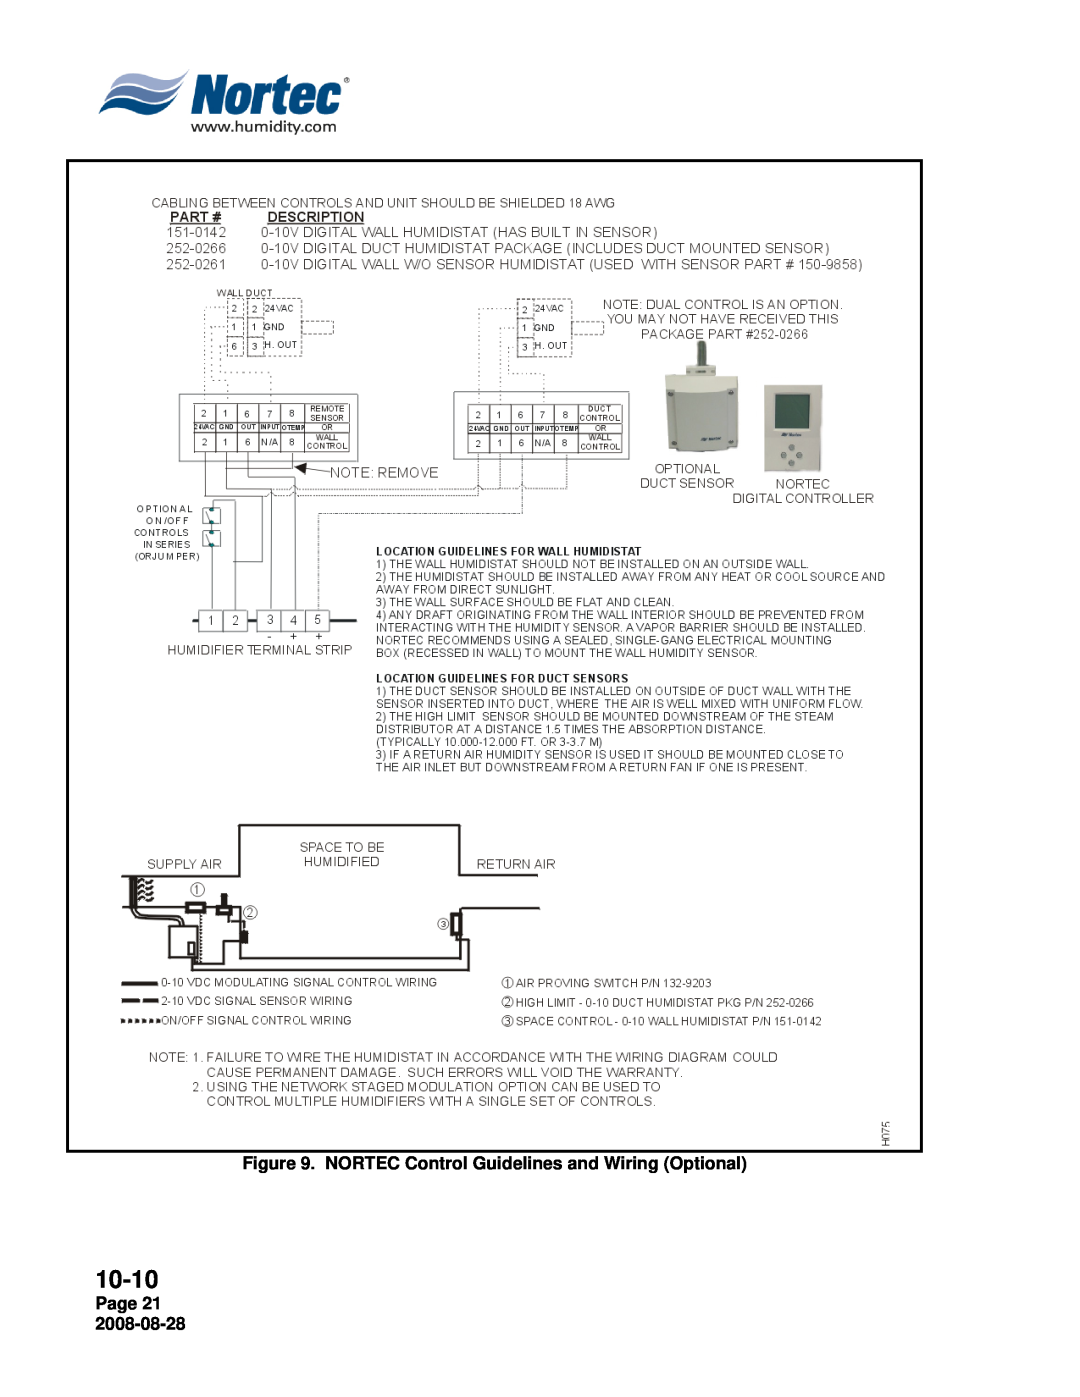 Nortec NH Series installation manual 10-10, Page 21 